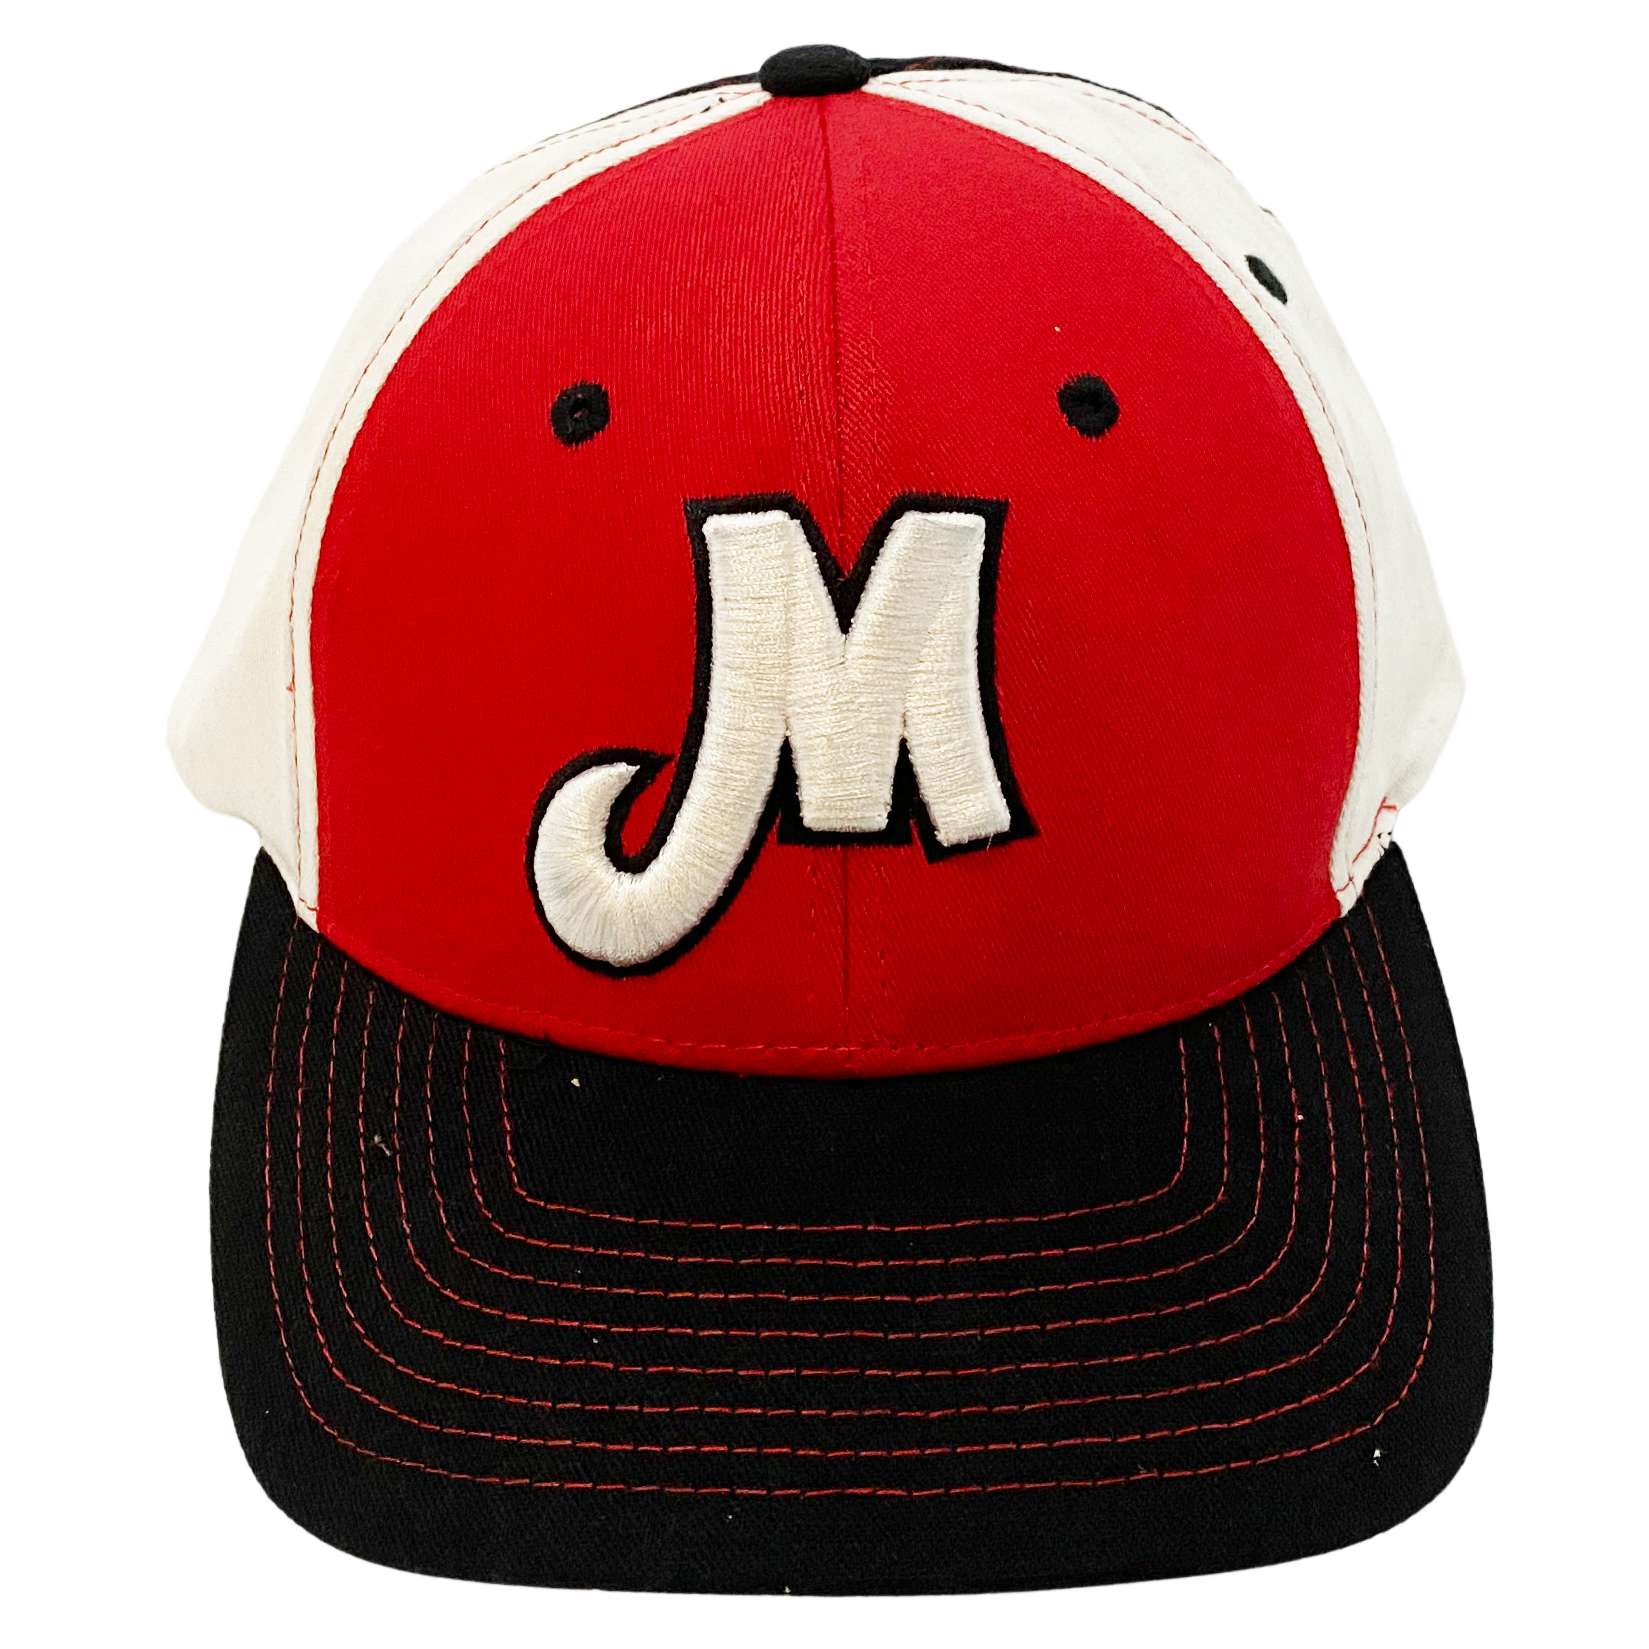 Portland Mavericks Flex Hat - Red - Cotton - S/M - Royal Retros